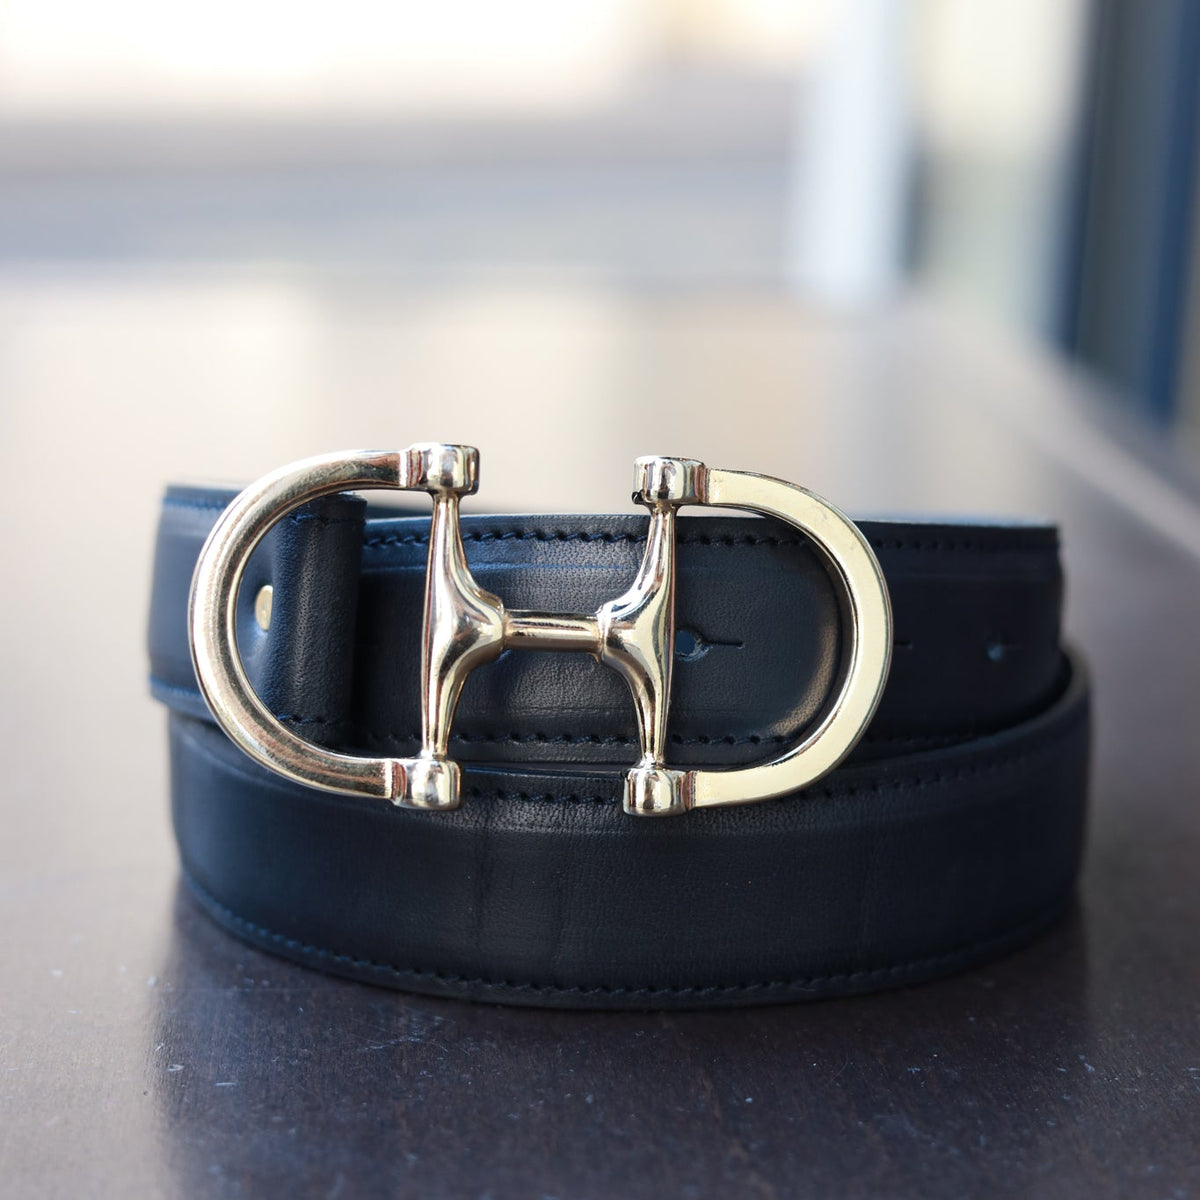 Women's Capuccino suede leather belt with horsebit buckle - Curling Paris